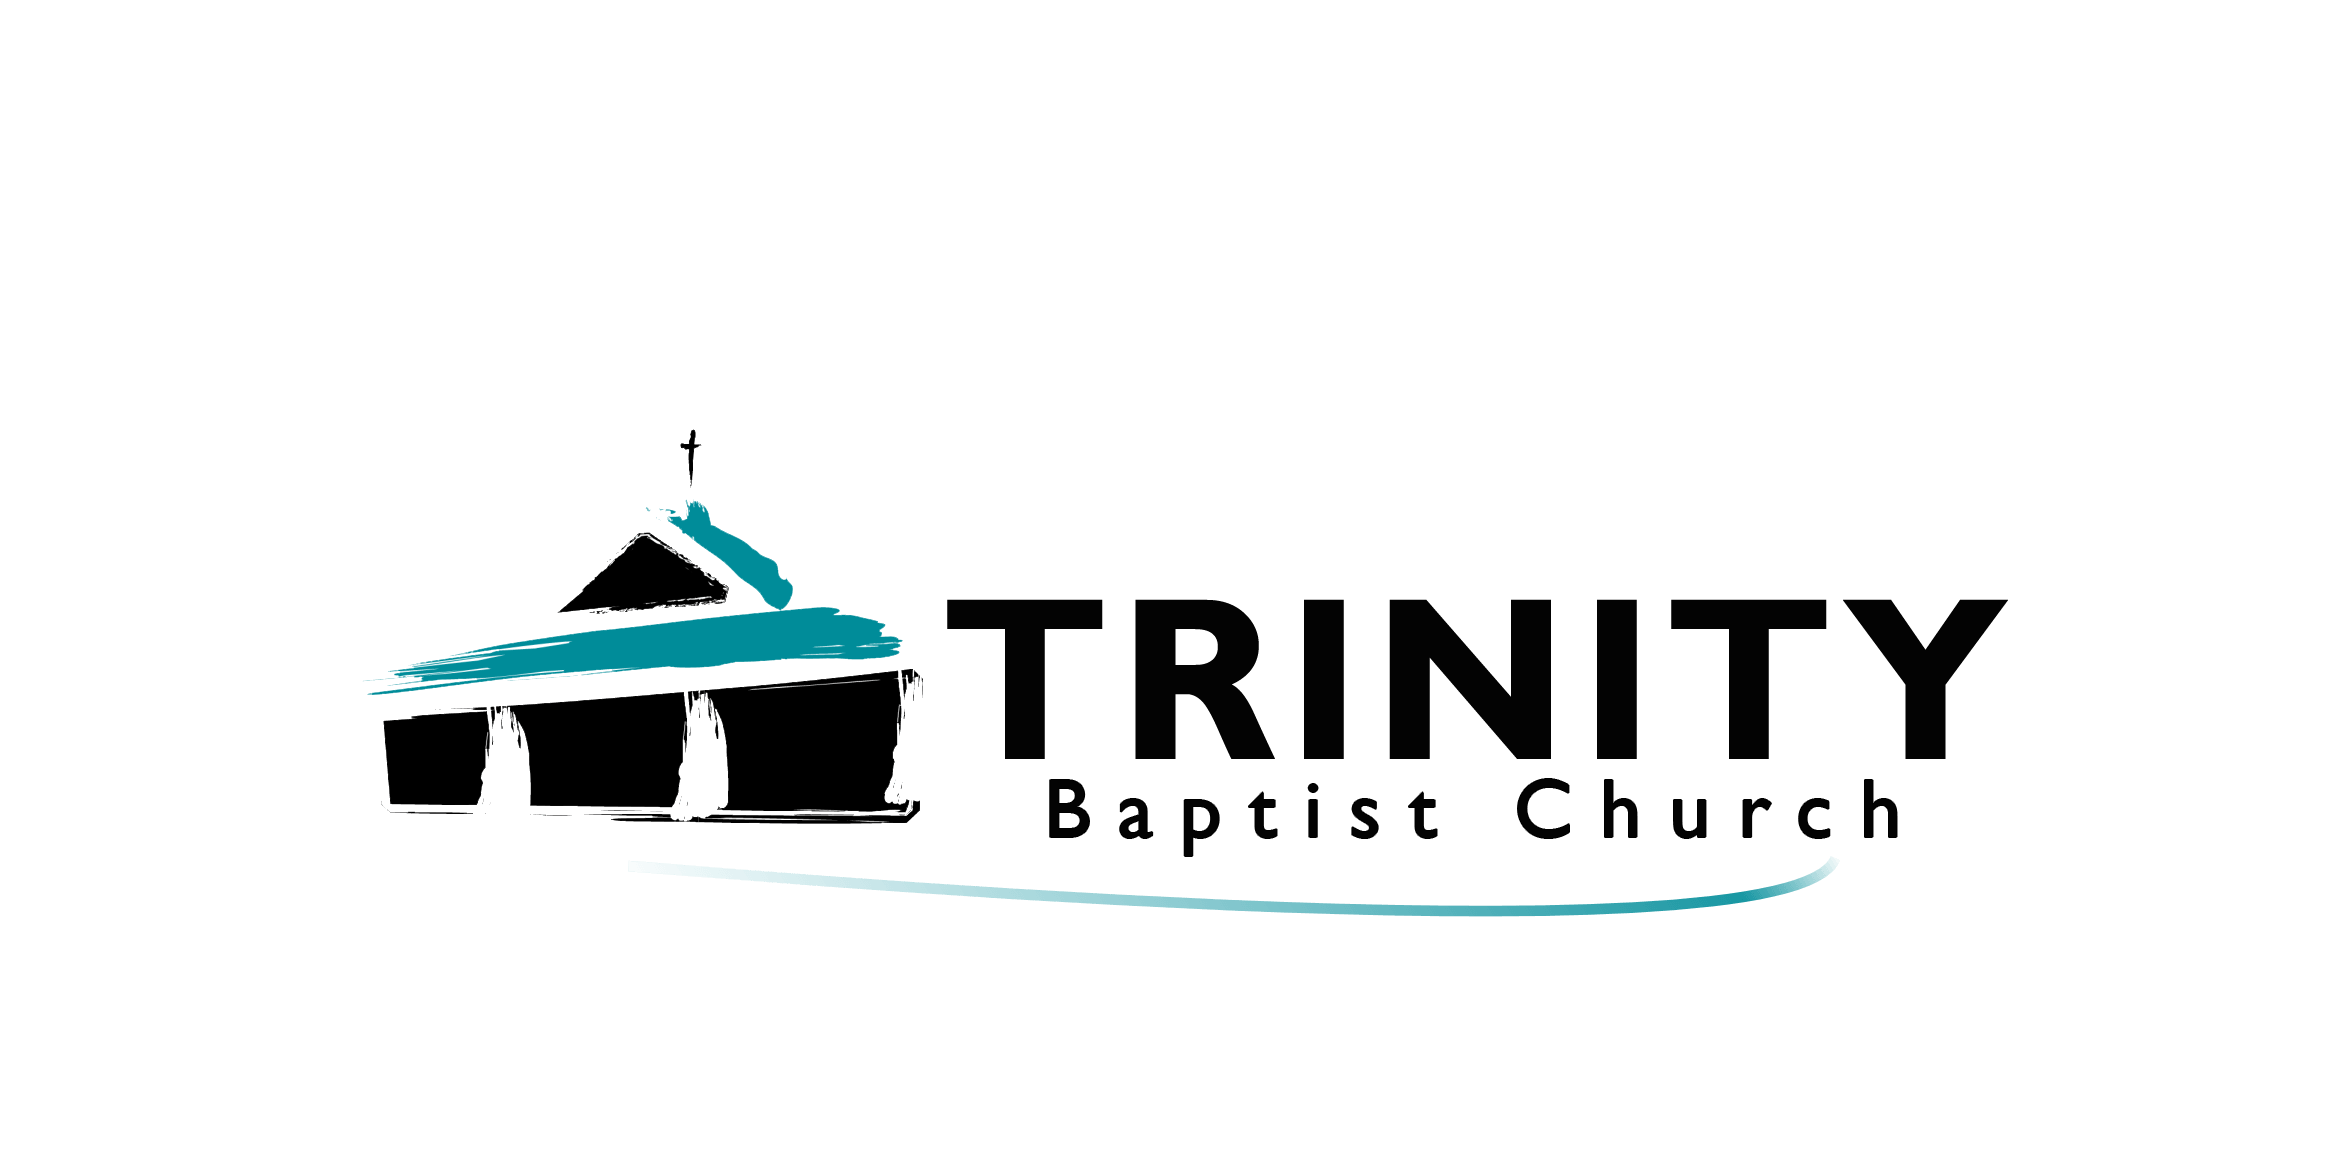 Church Logo - Trinity Baptist Church Lake Charles - Trinity Baptist Church